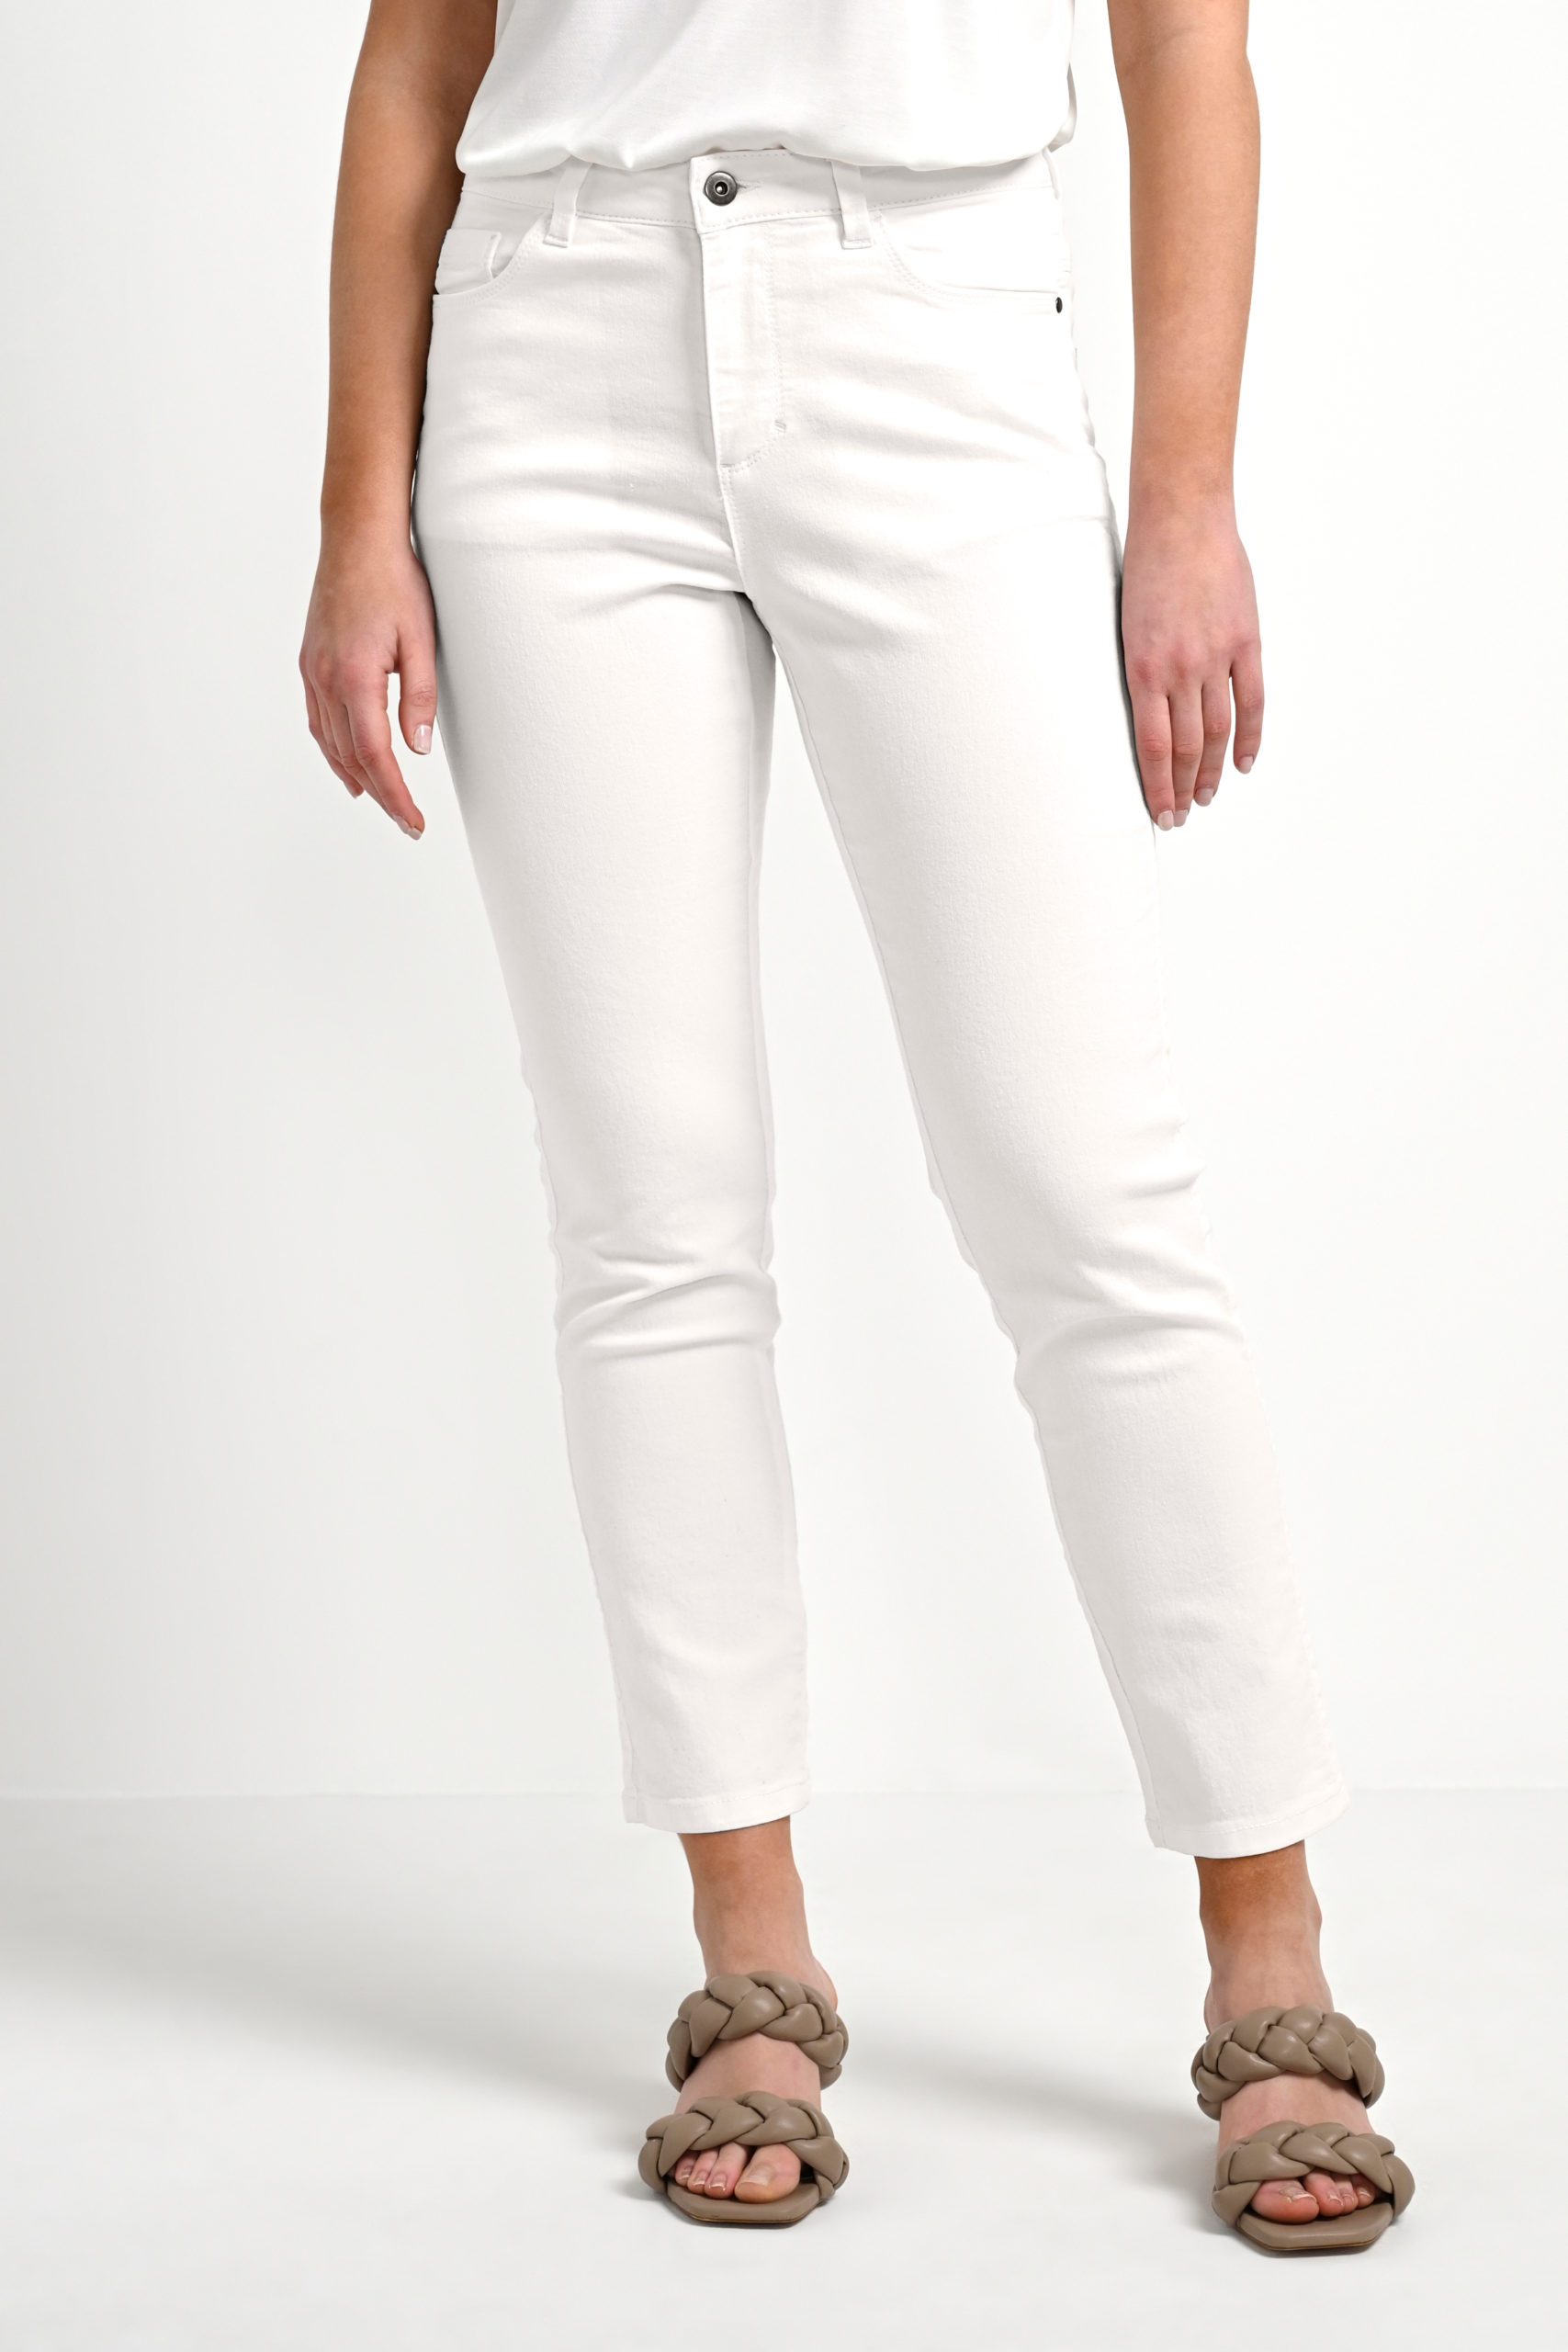 KAzelina Jeans 7/8 white front